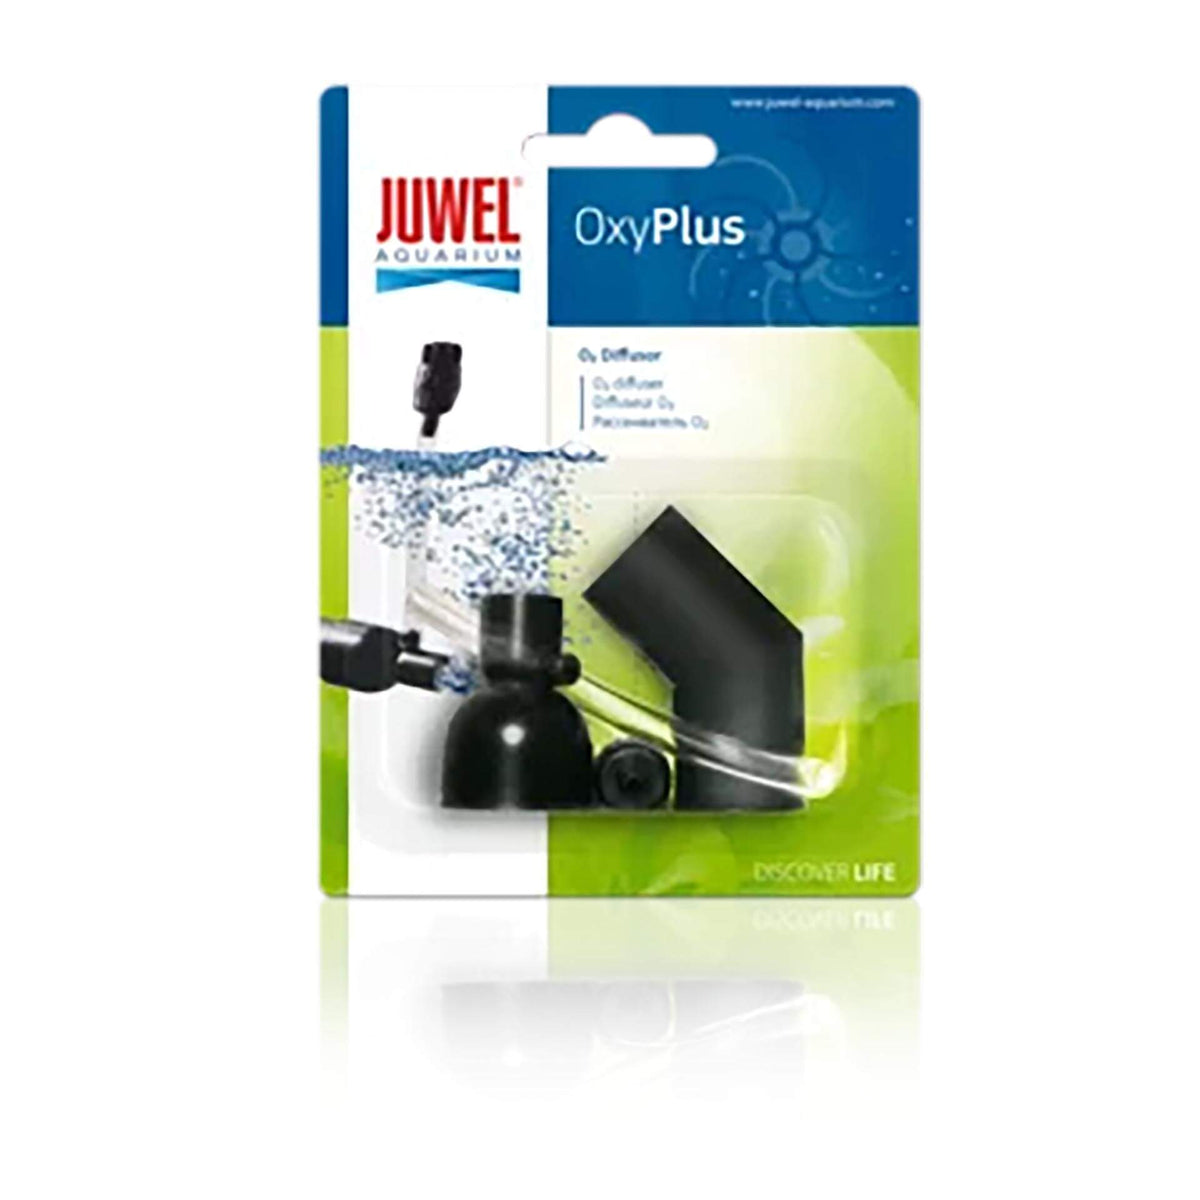 Juwel OxyPlus o2 Diffuser for Pump